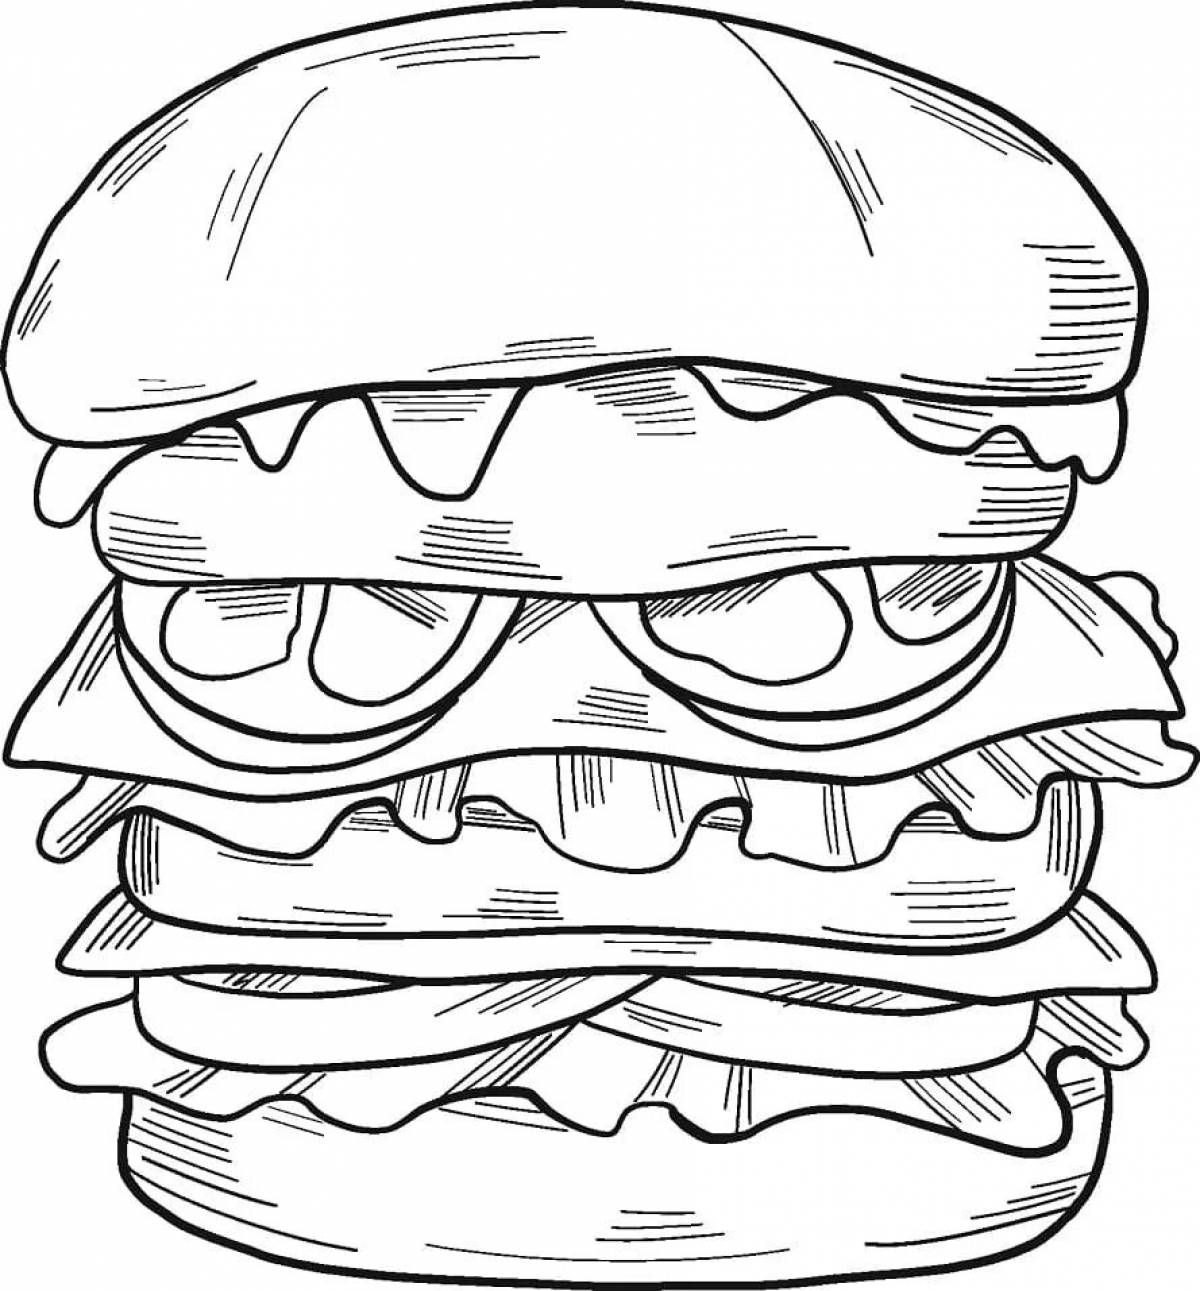 Cheeseburger fun coloring